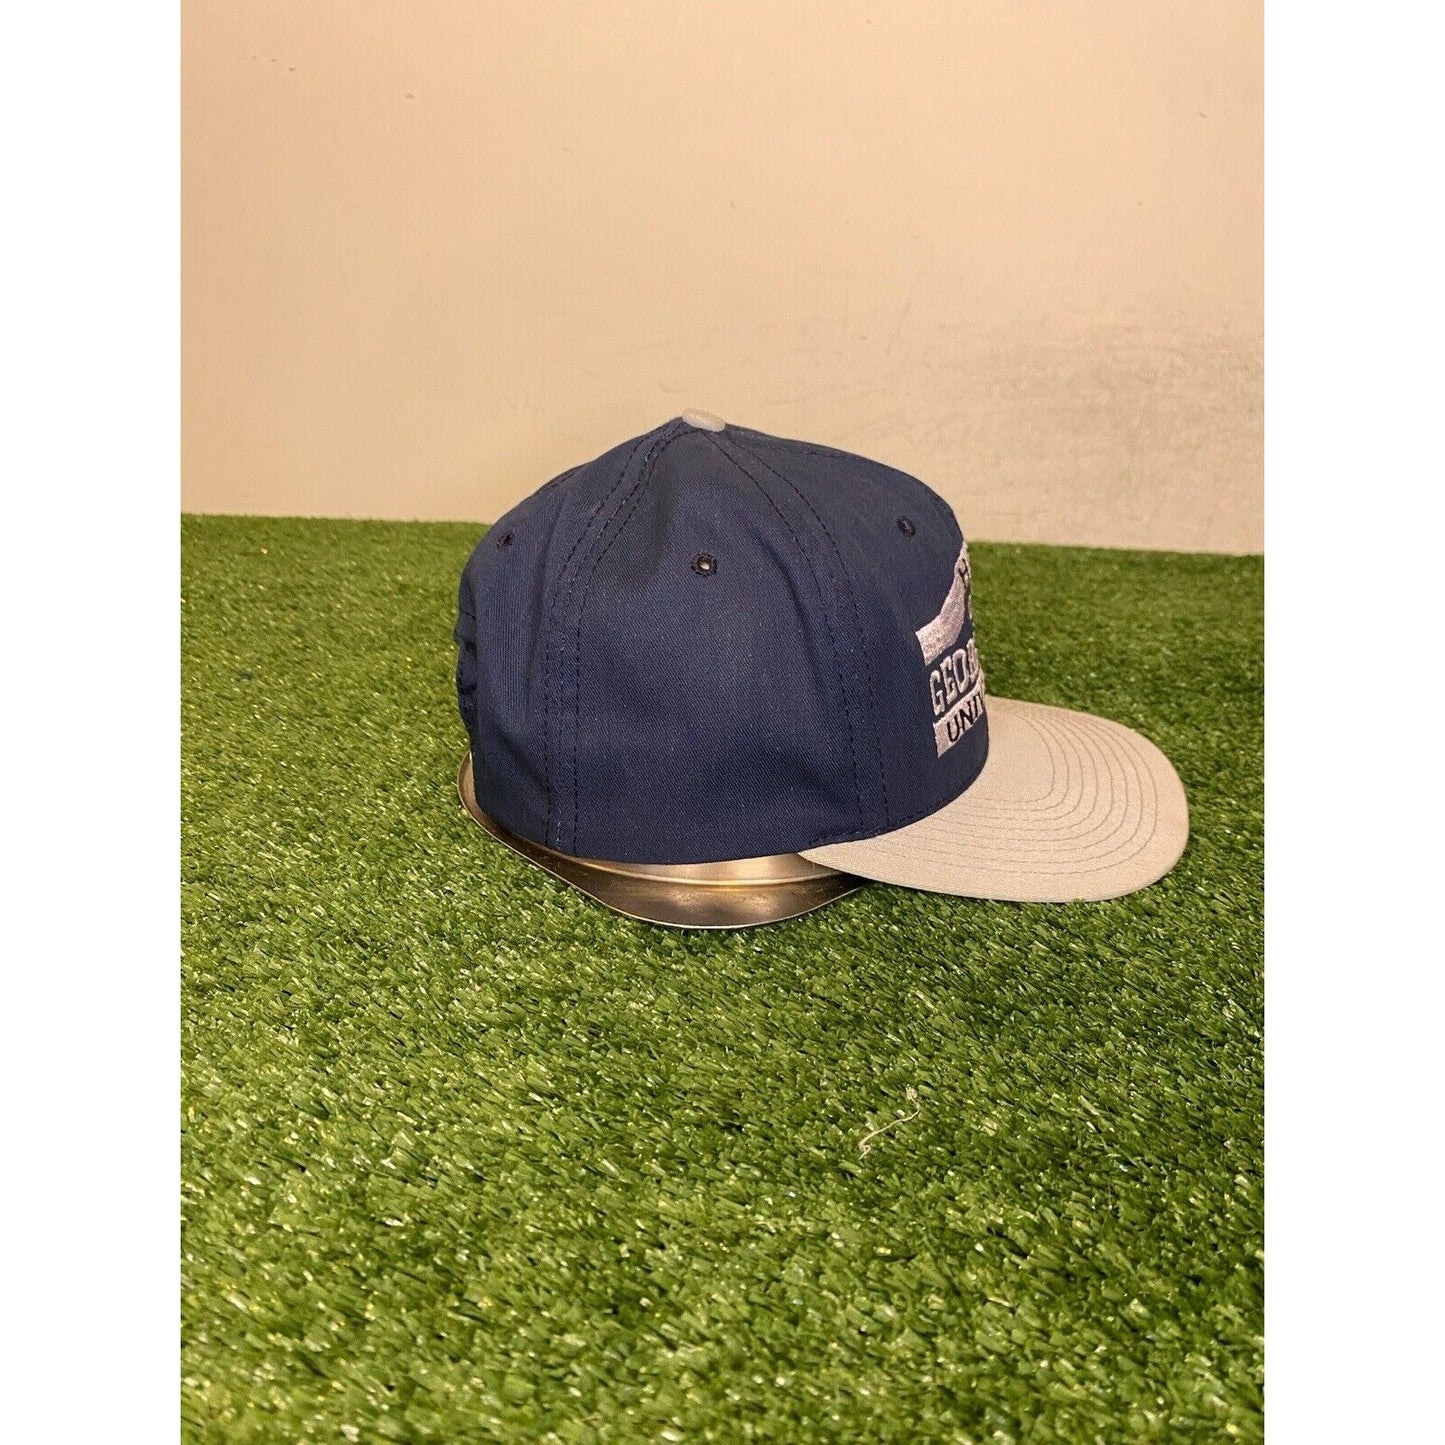 Vintage Georgetown Hoyas hat cap snap back basketball blue silver mens 90s p cap